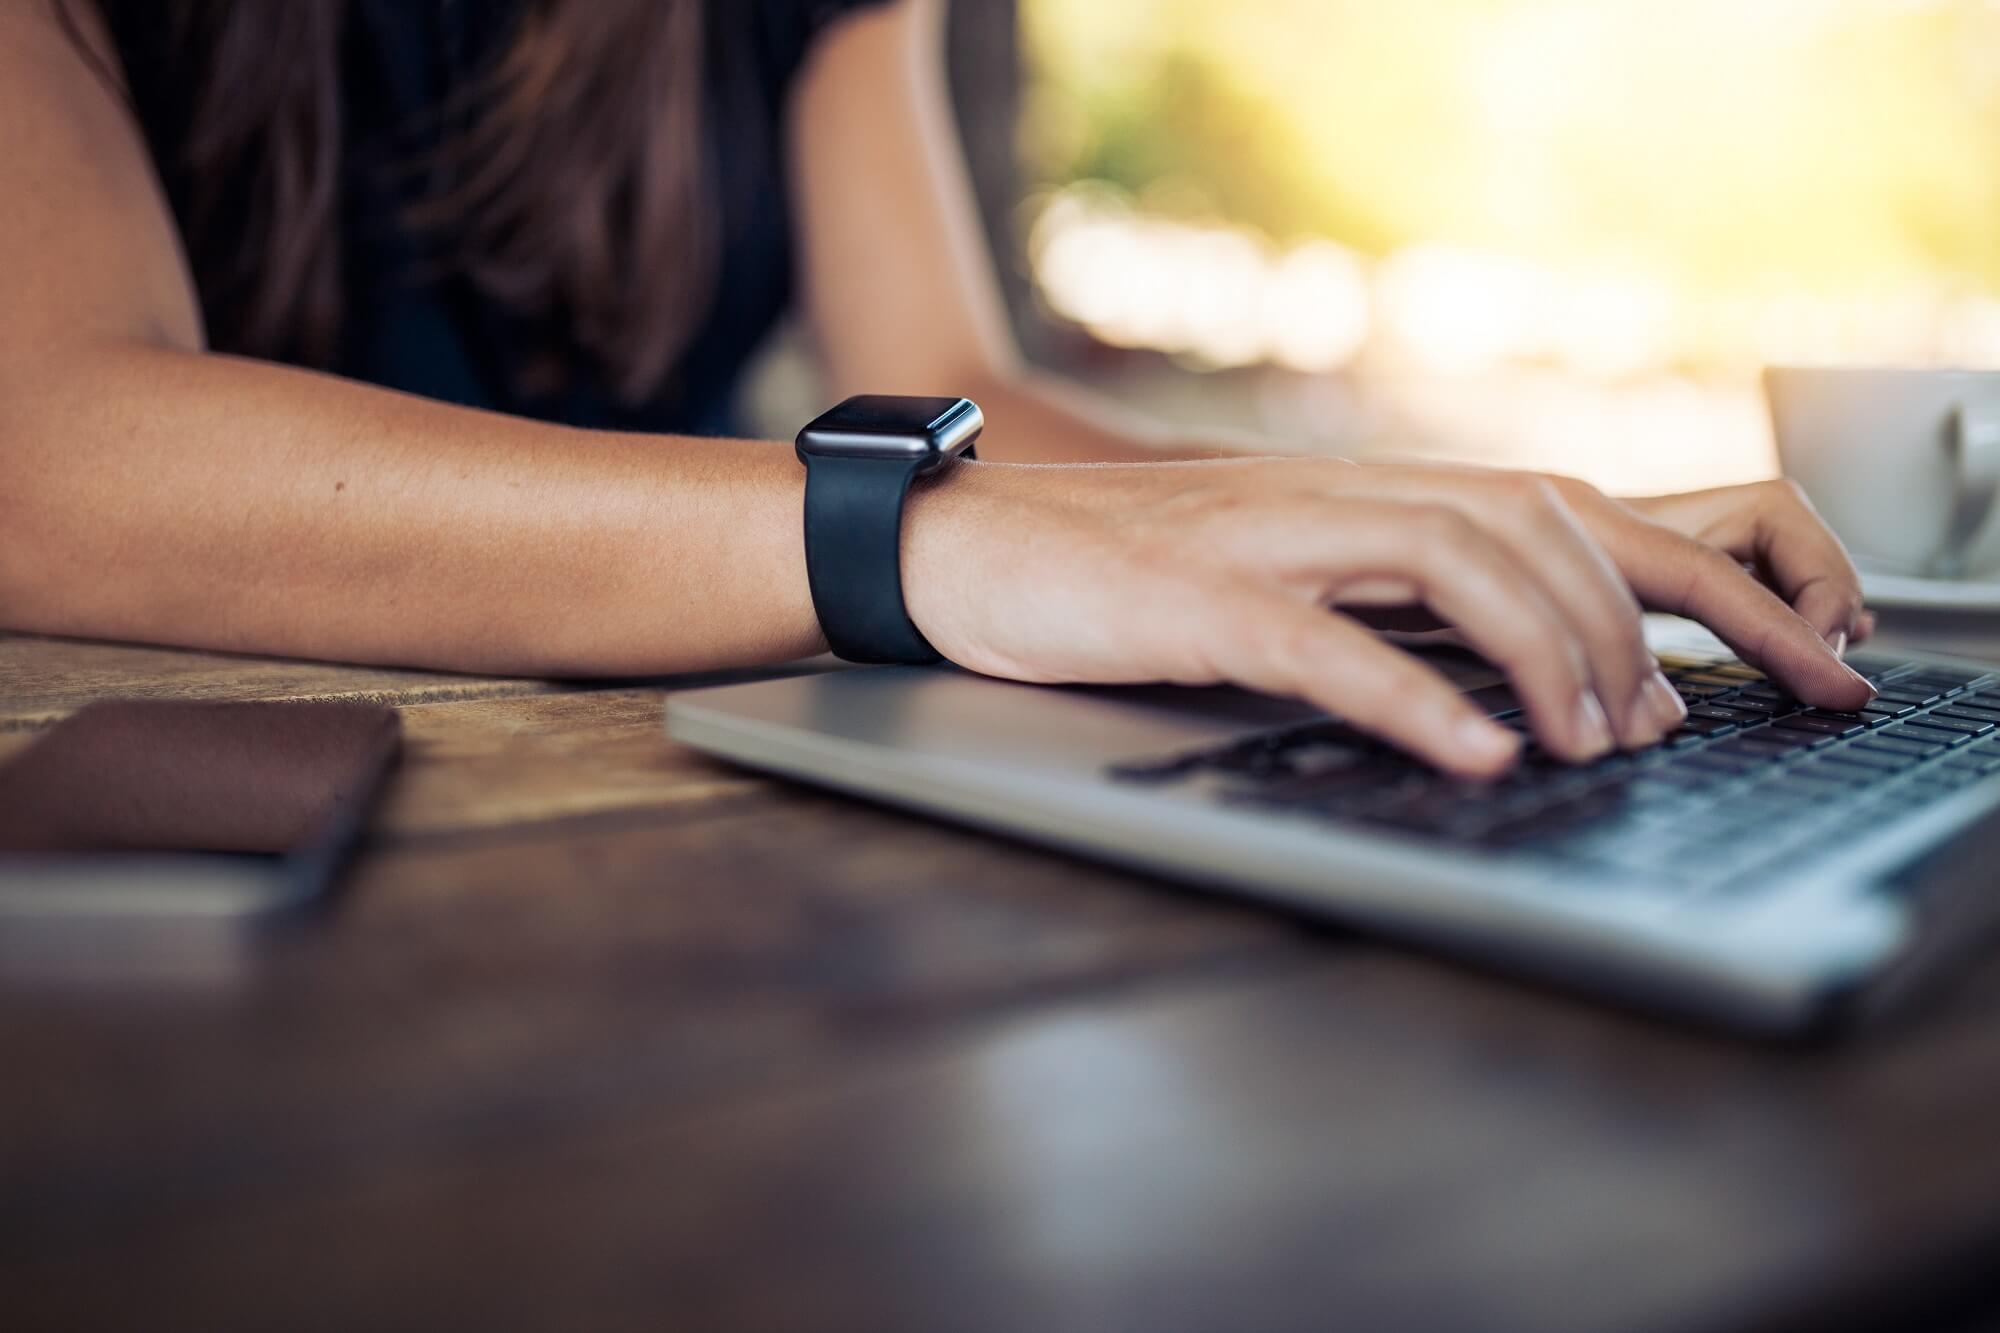 Hands of woman wearing smartwatch on the keyboard